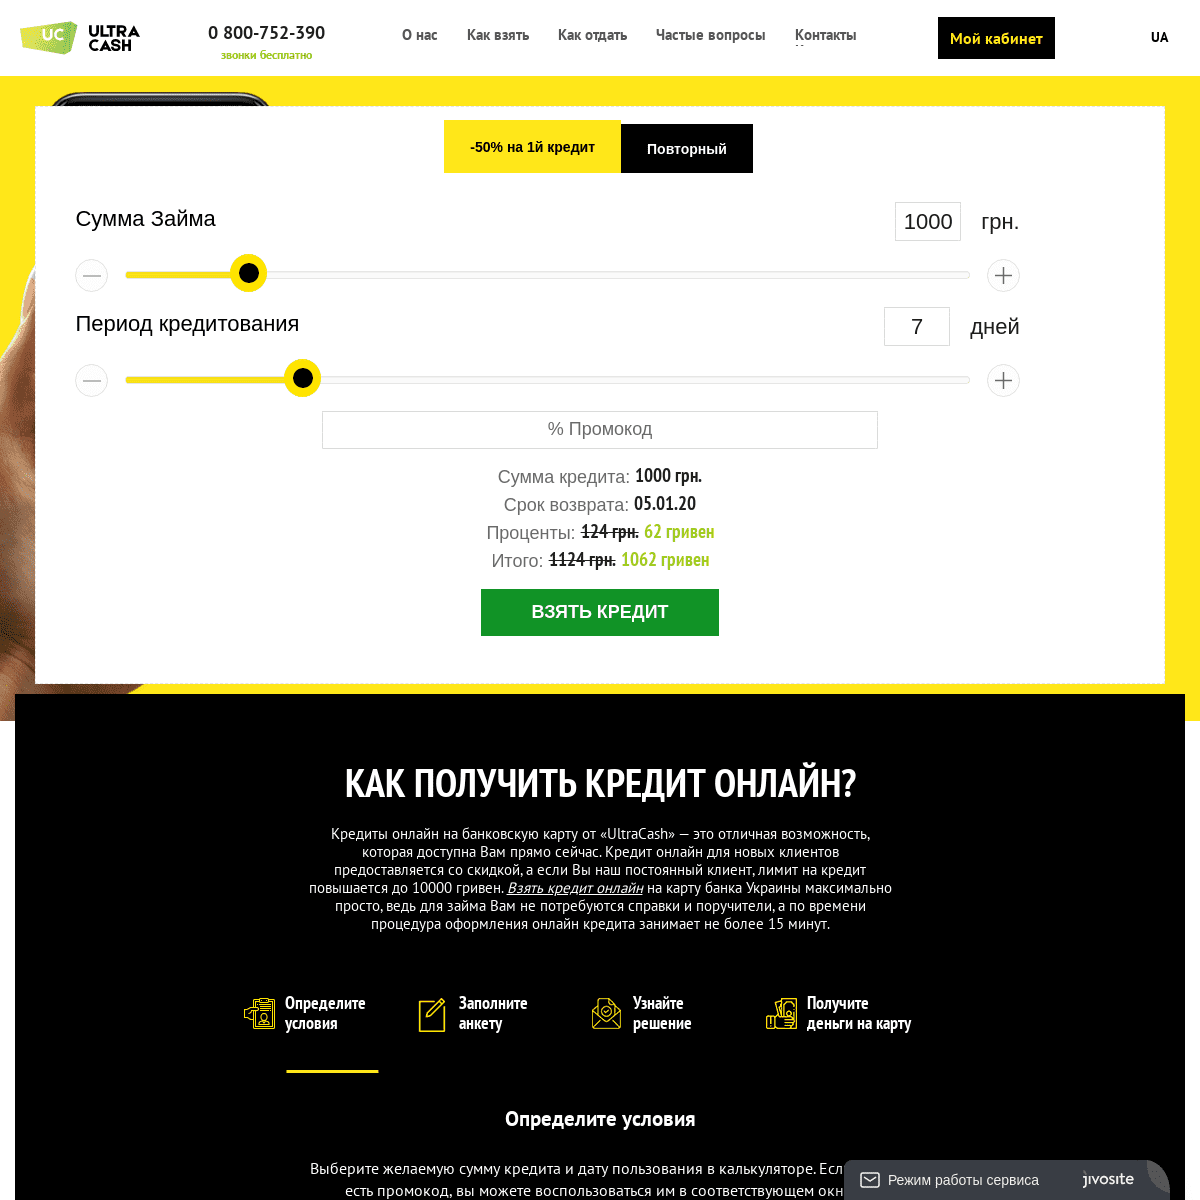 A complete backup of ultracash.com.ua